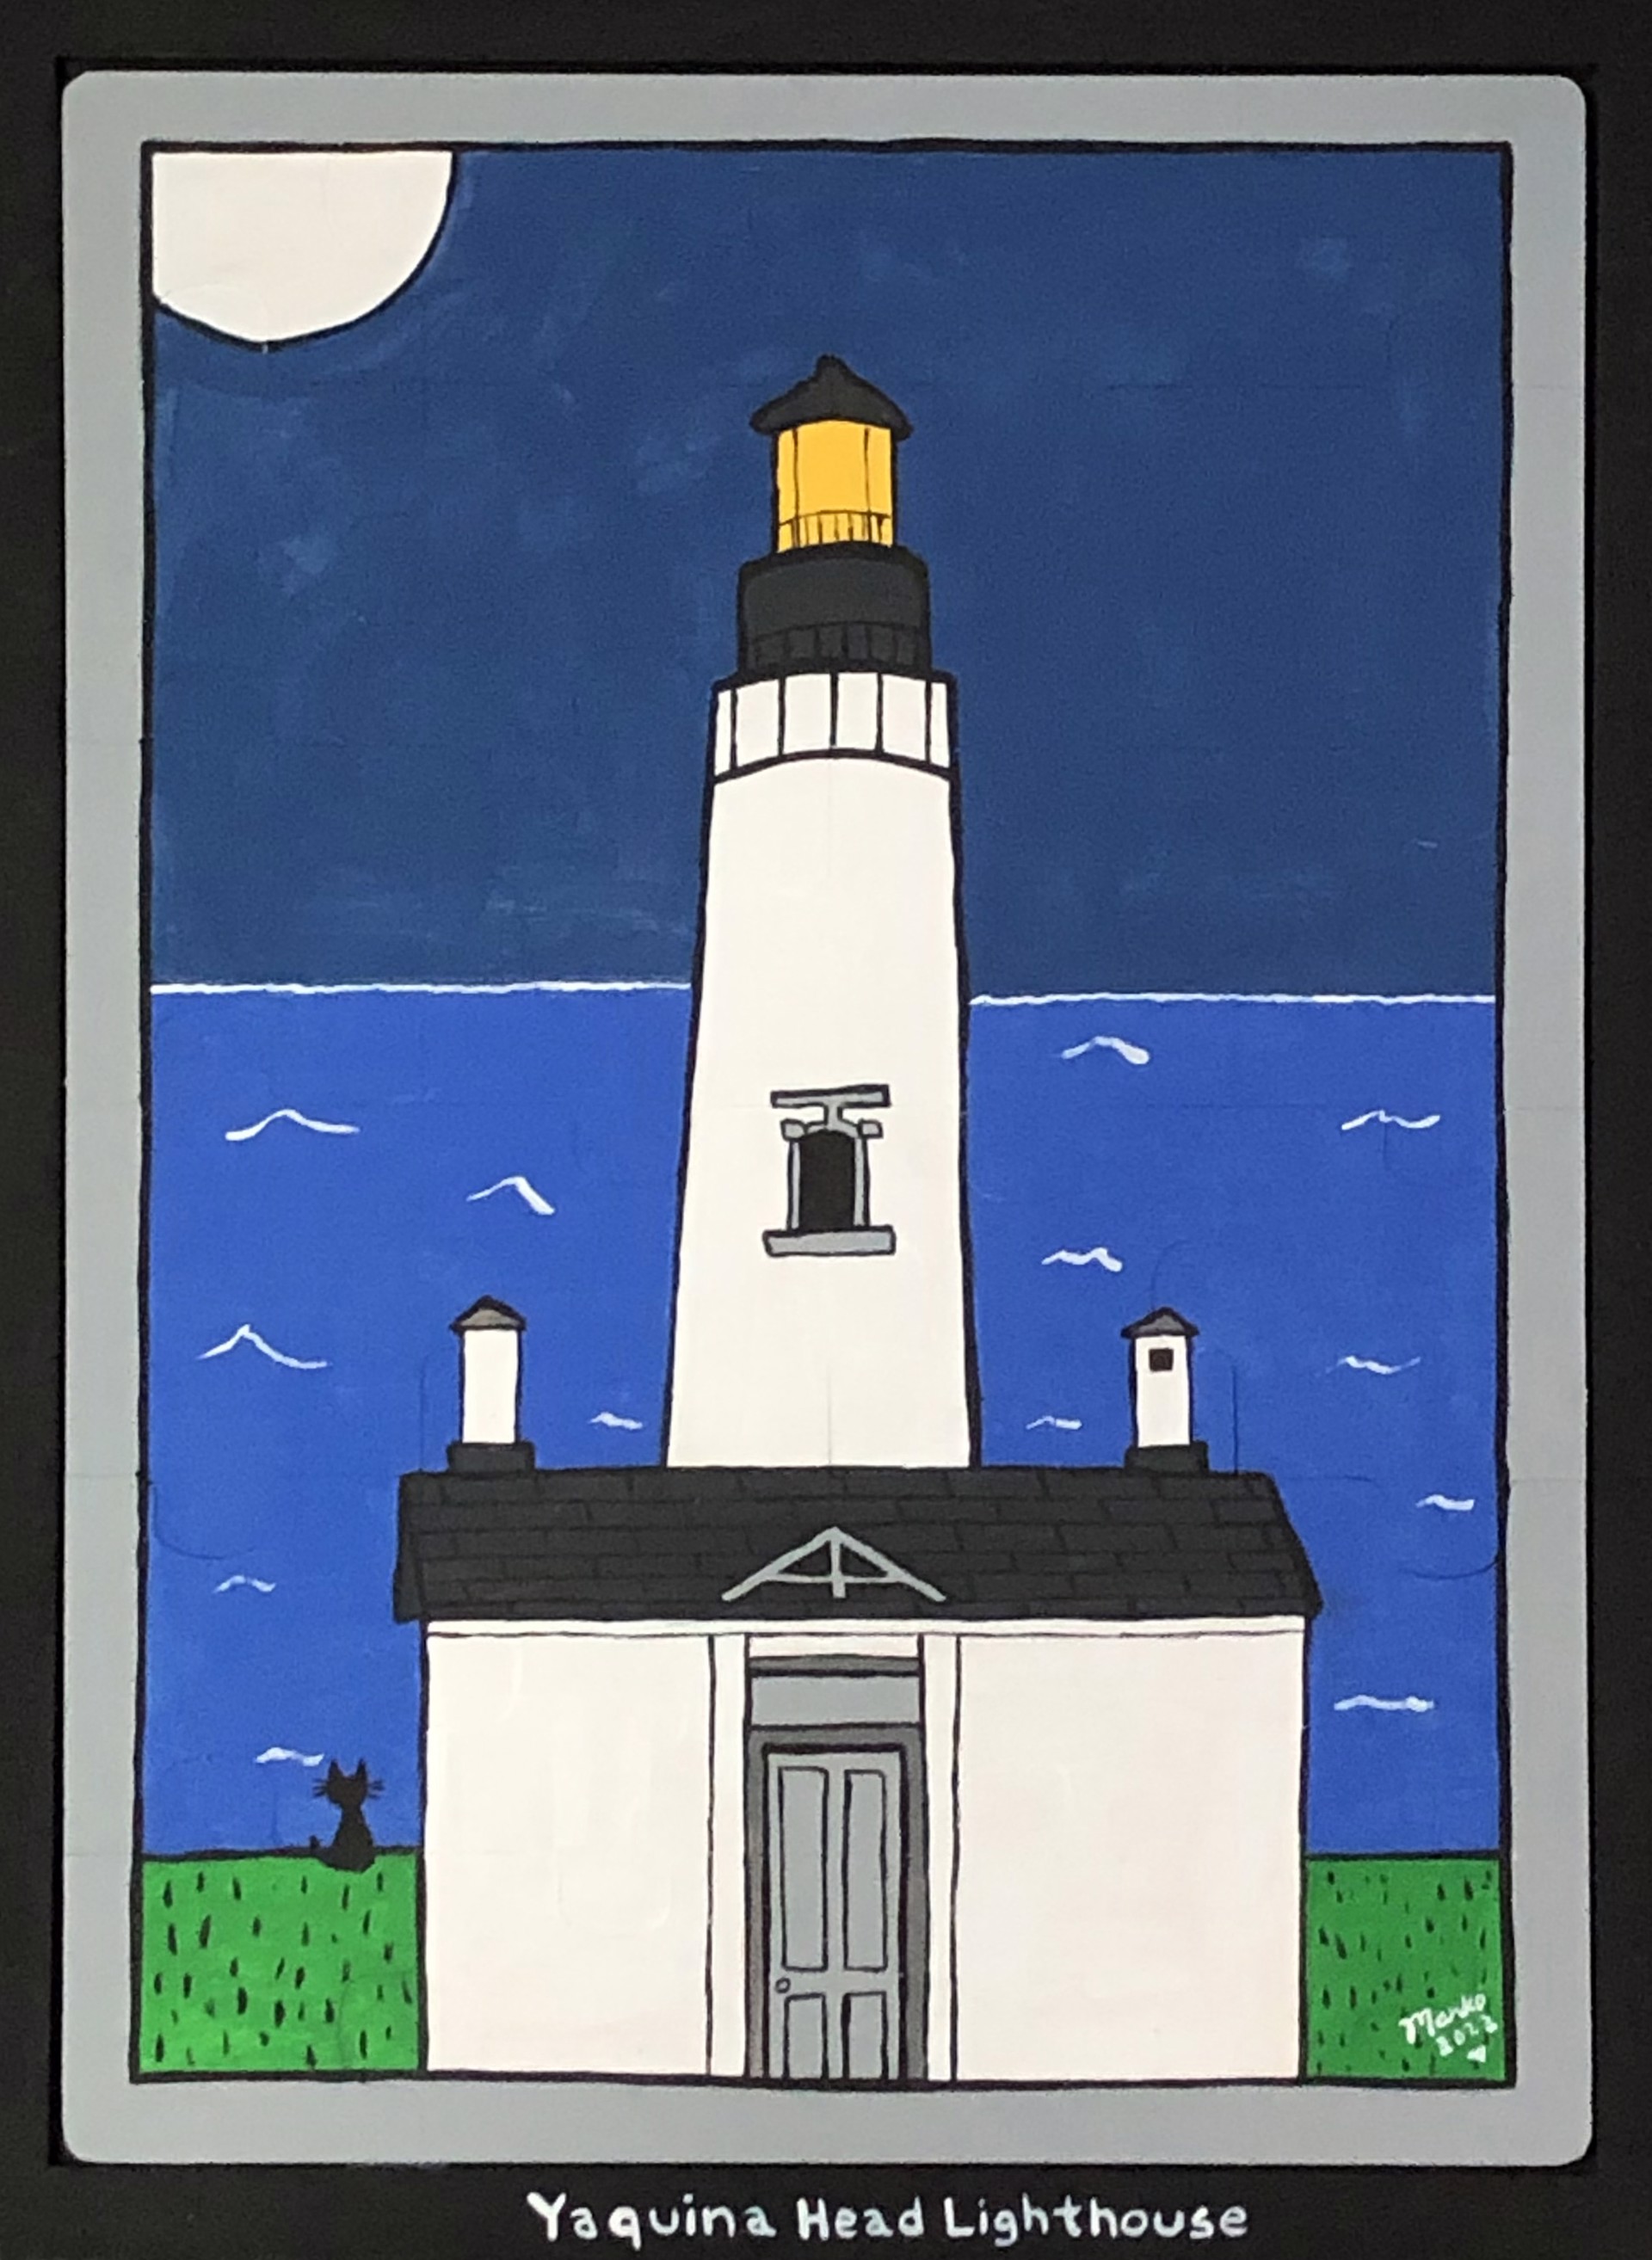 Yaquina Head Lighthouse by Mark O'Malley